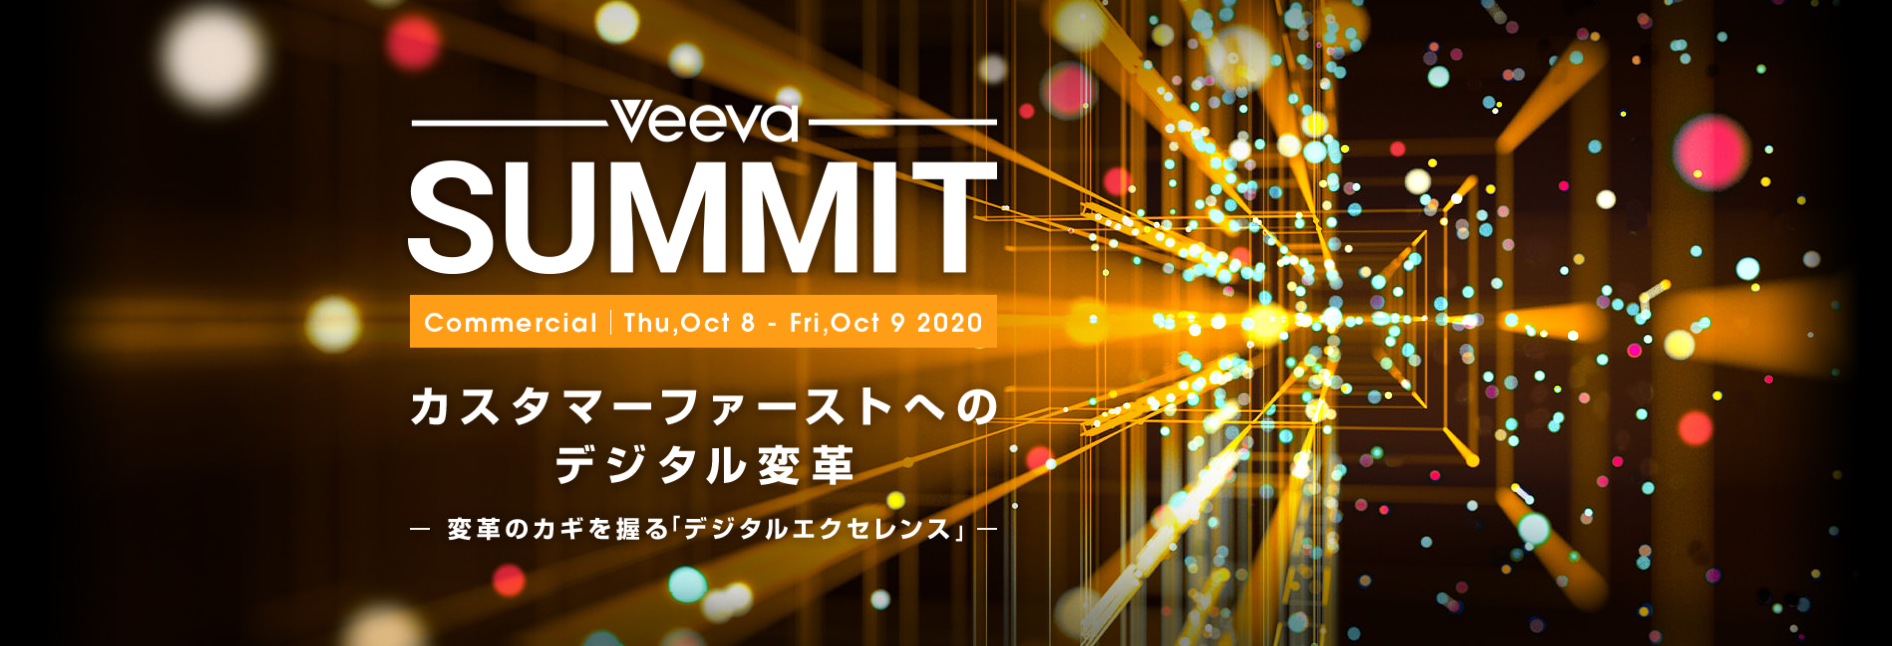 Veeva Commercial Summit 2020